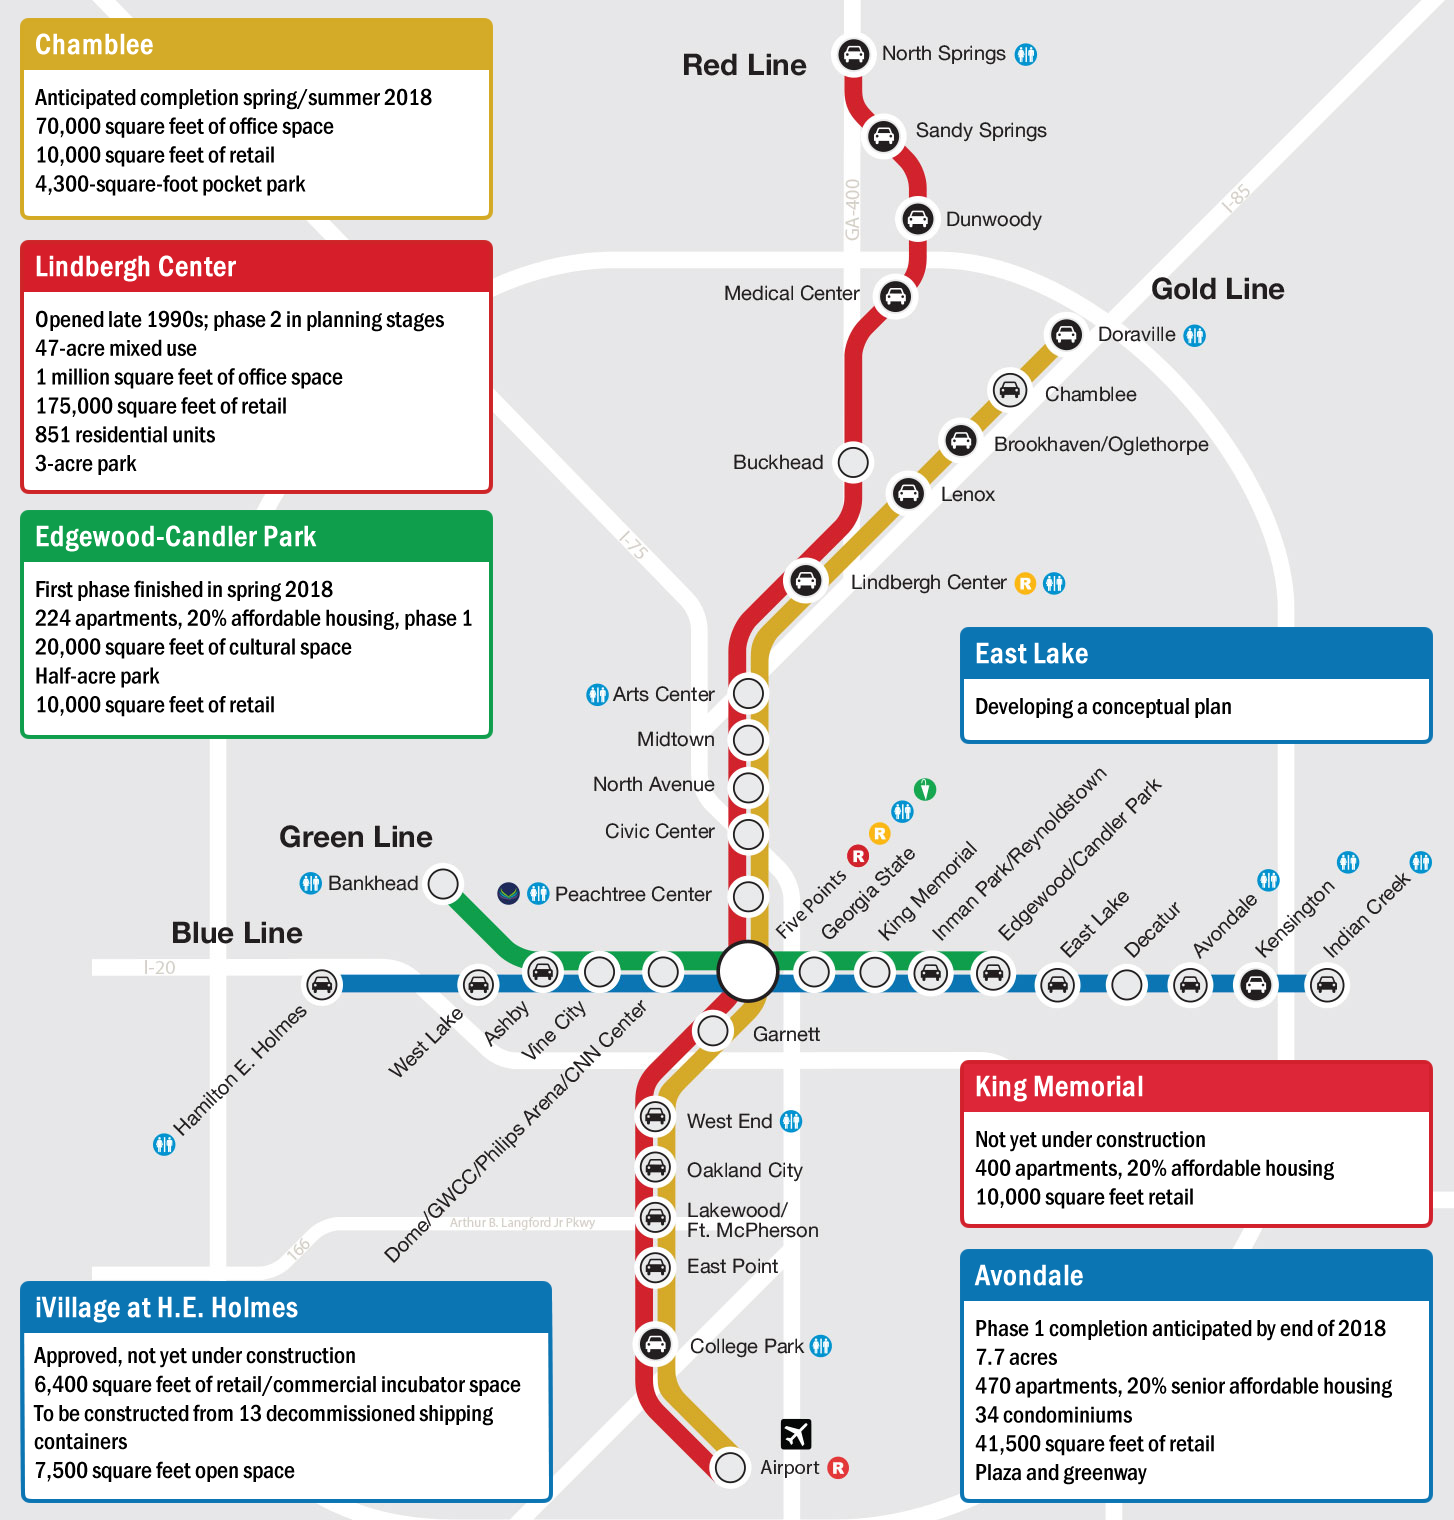 map of the MARTA transit system